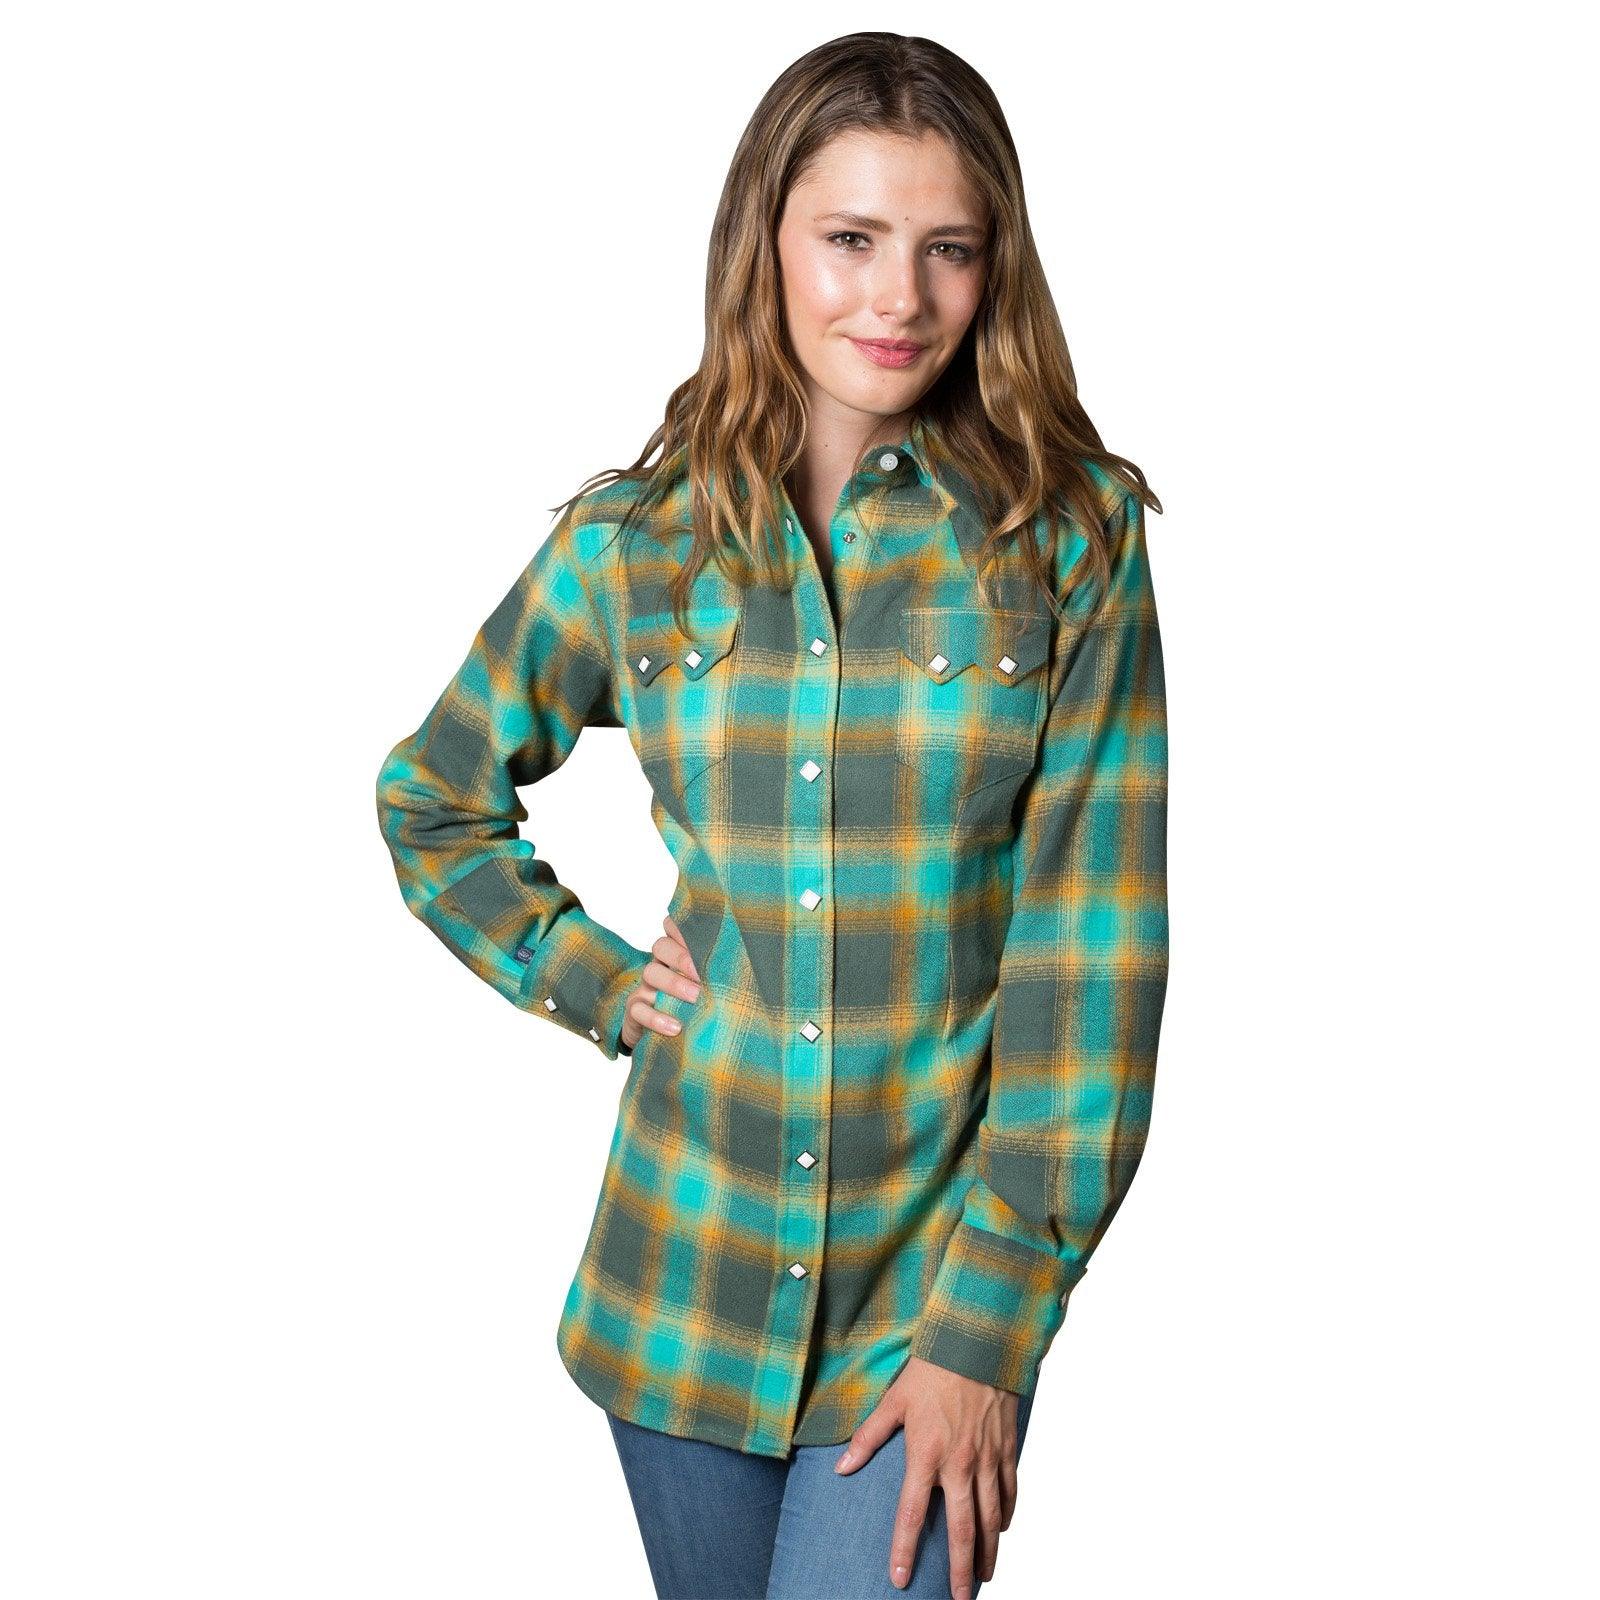 Women's Western Clothing, Plaid Shirts, Button Shirts, T-Shirts